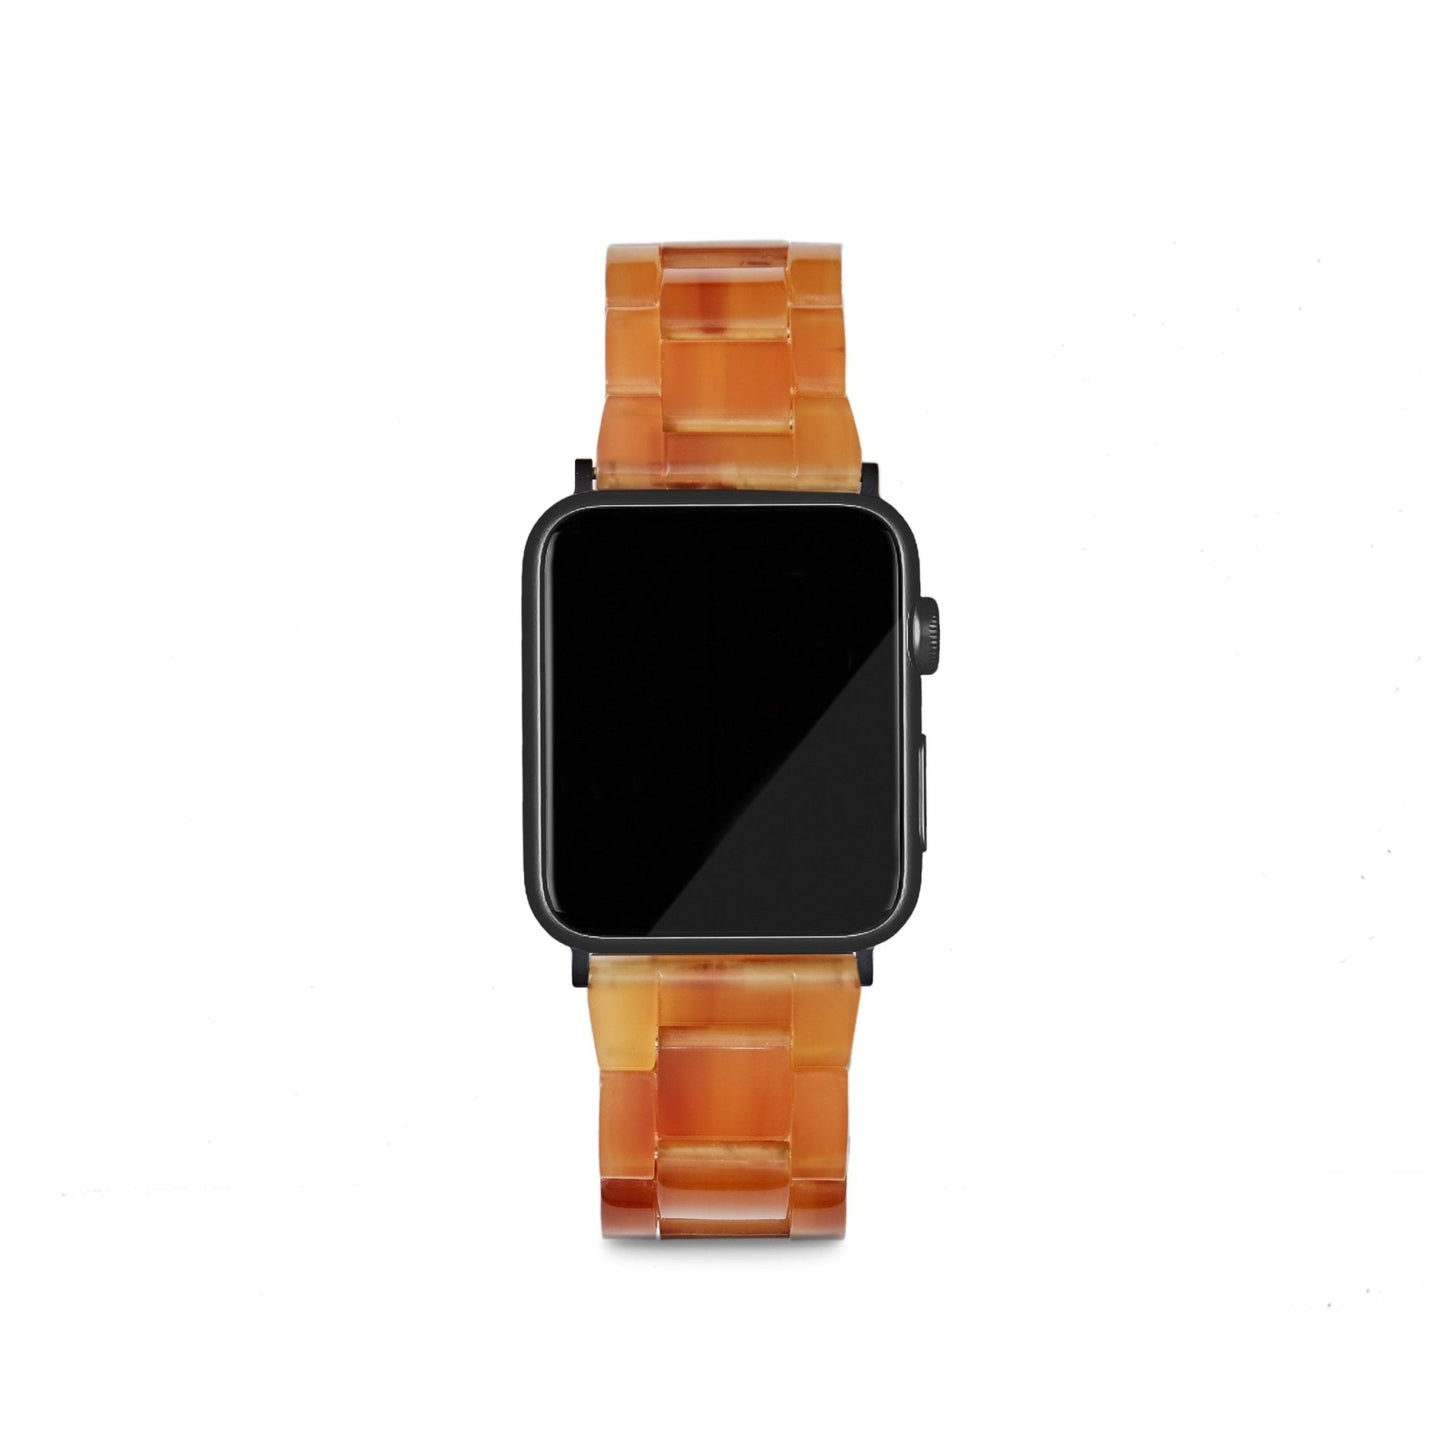 MACHETE Apple Watch Band in Cognac (Old Edition)